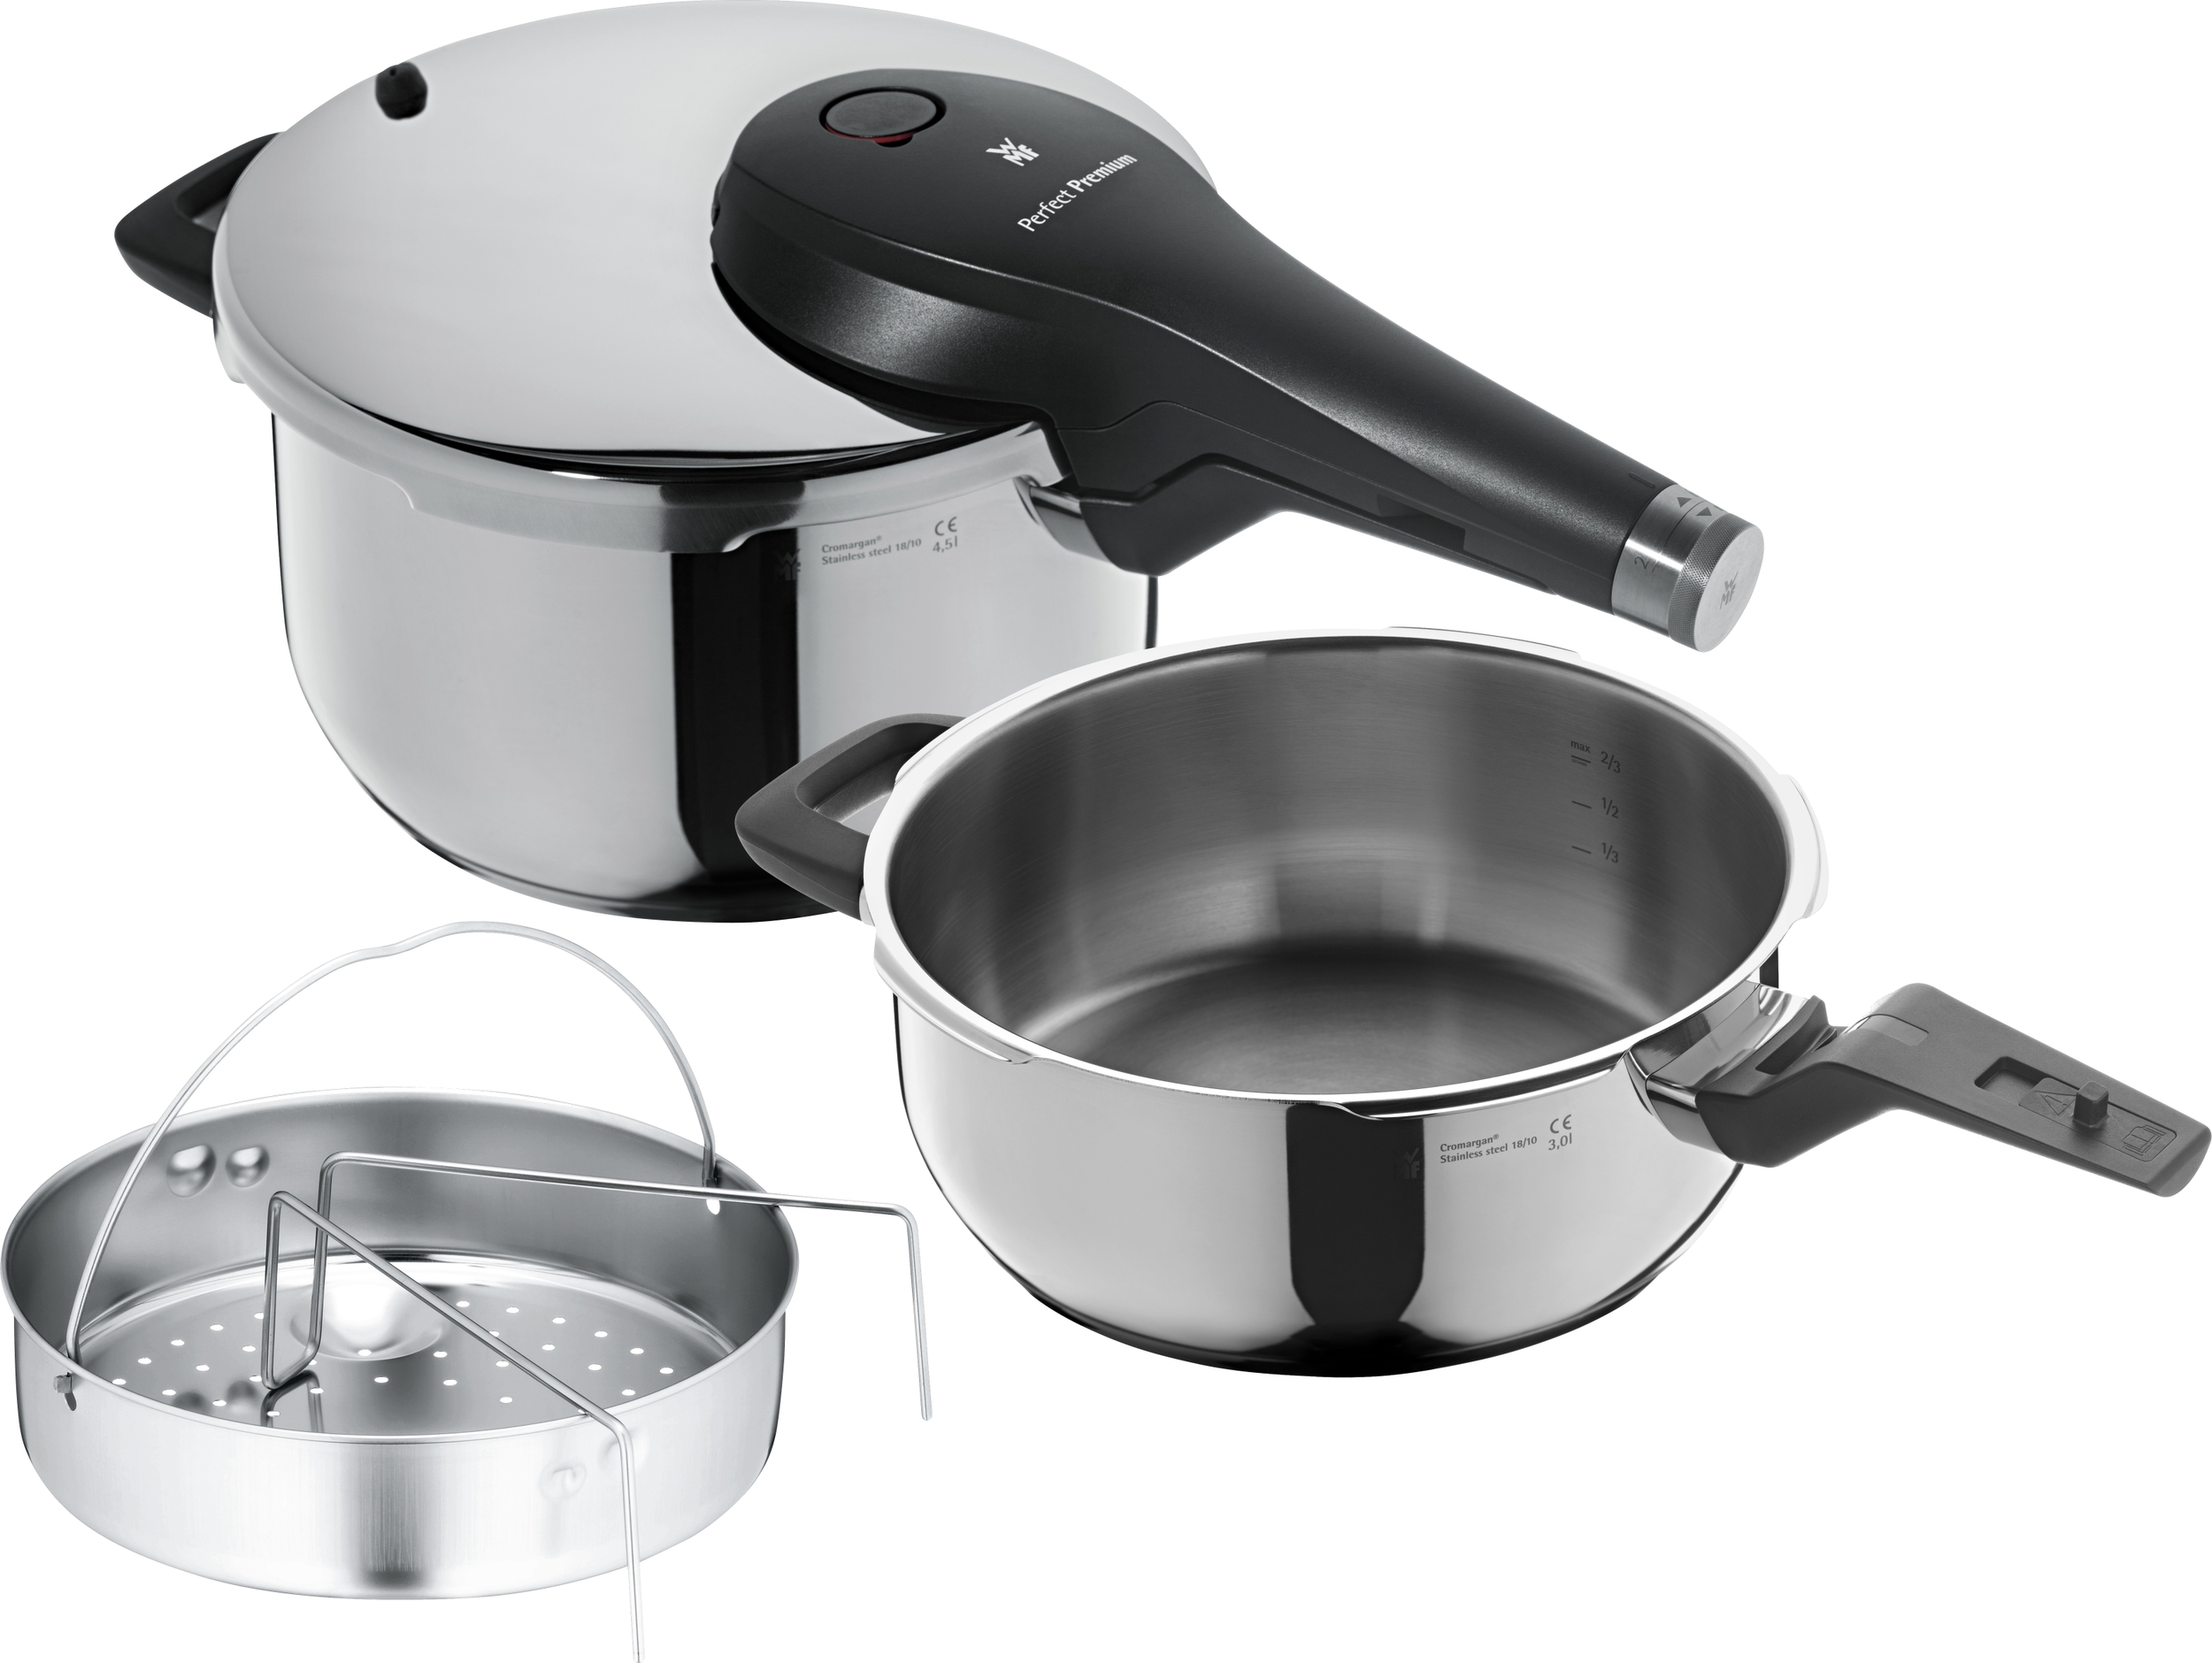 https://3fa-media.com/wmf/wmf-perfect-plus-pressure-cookers-4-5-l-3-l-with-a-steamer-insert-3-el__107002_494276b-s2500x2500.jpg